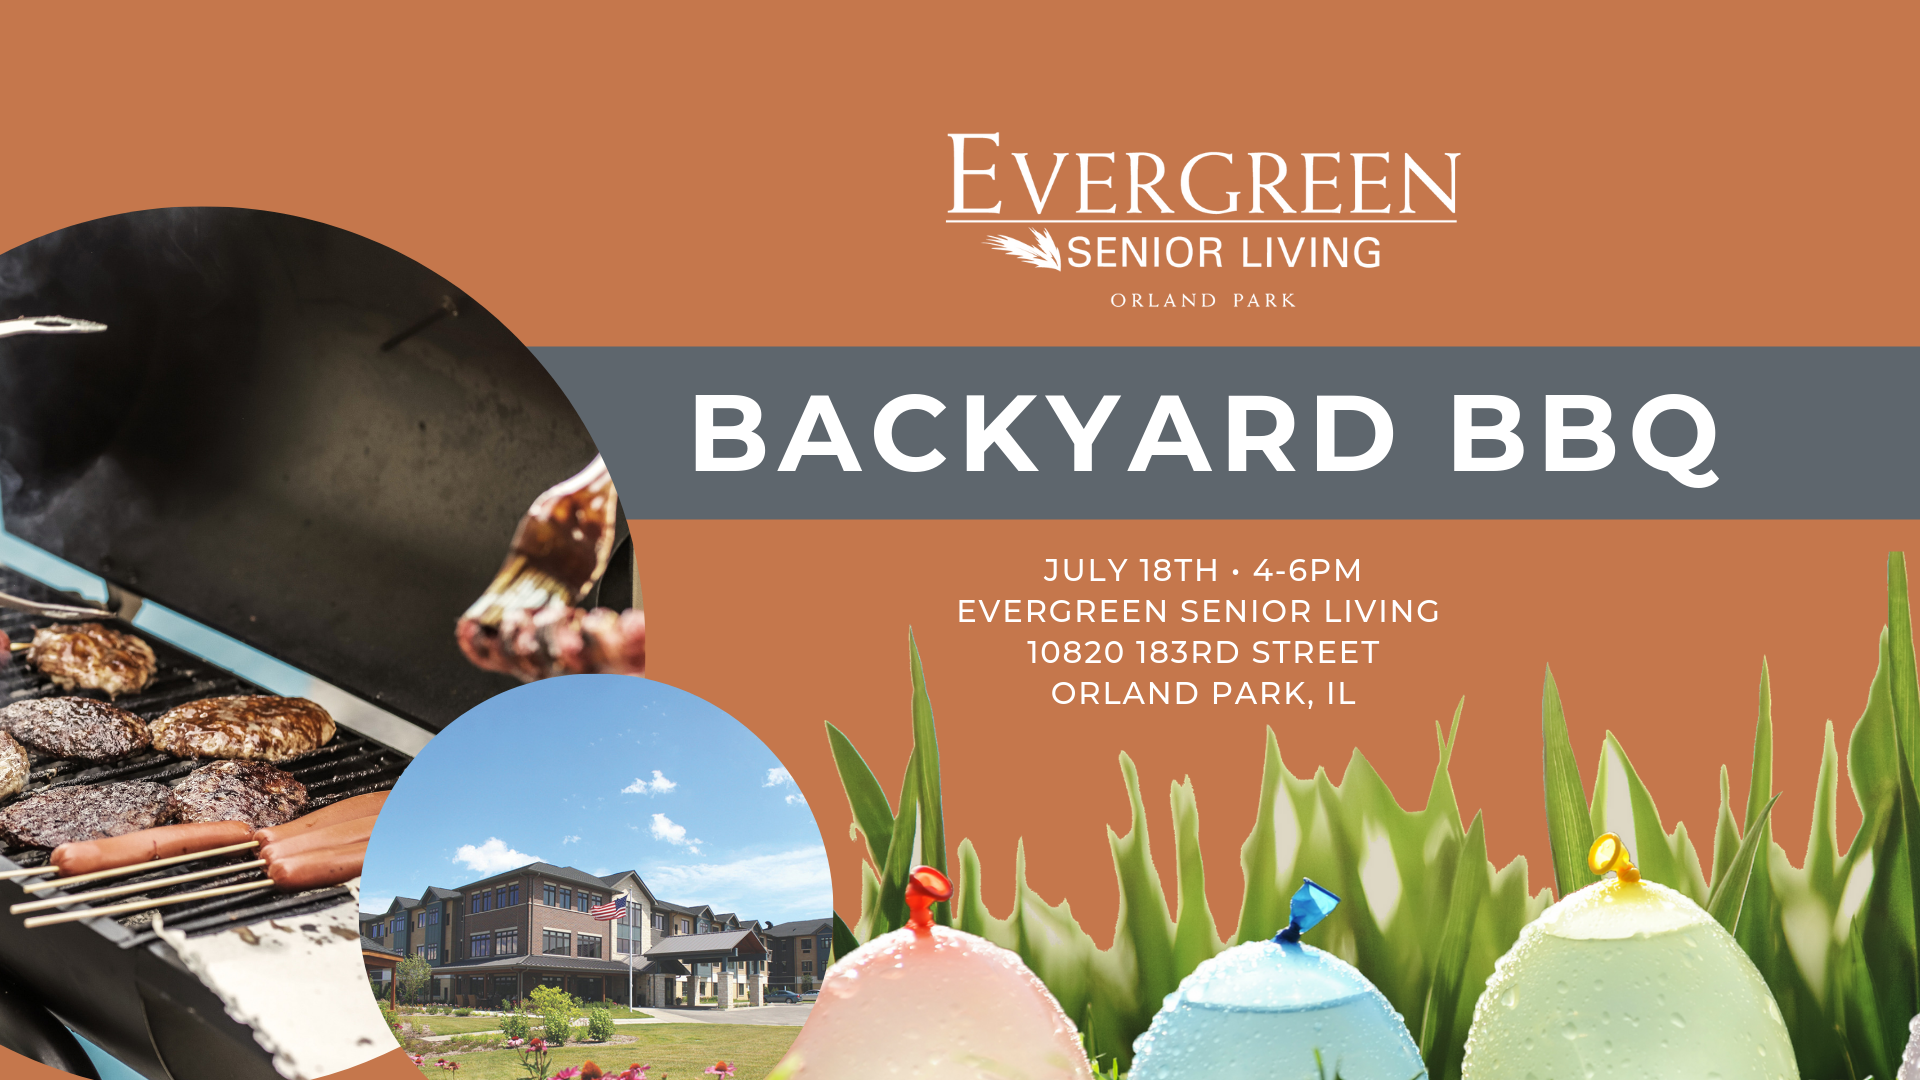 Join Evergreen Senior Living Orland Park for a Backyard BBQ